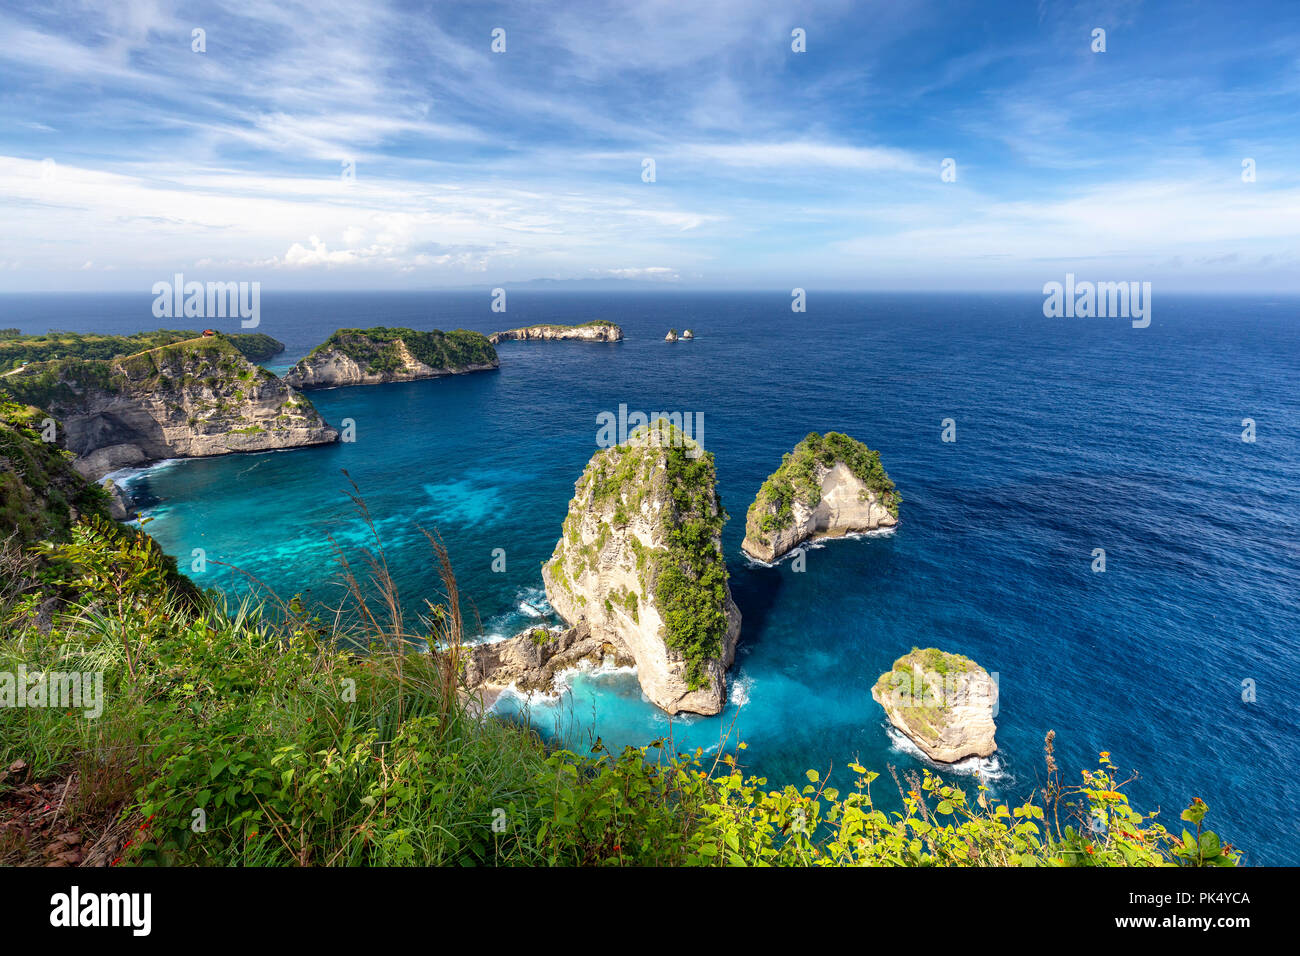 Beautiful wide angle landscape view of Raja Lima islands near Atuh Beach in Nusa Penida. Stock Photo